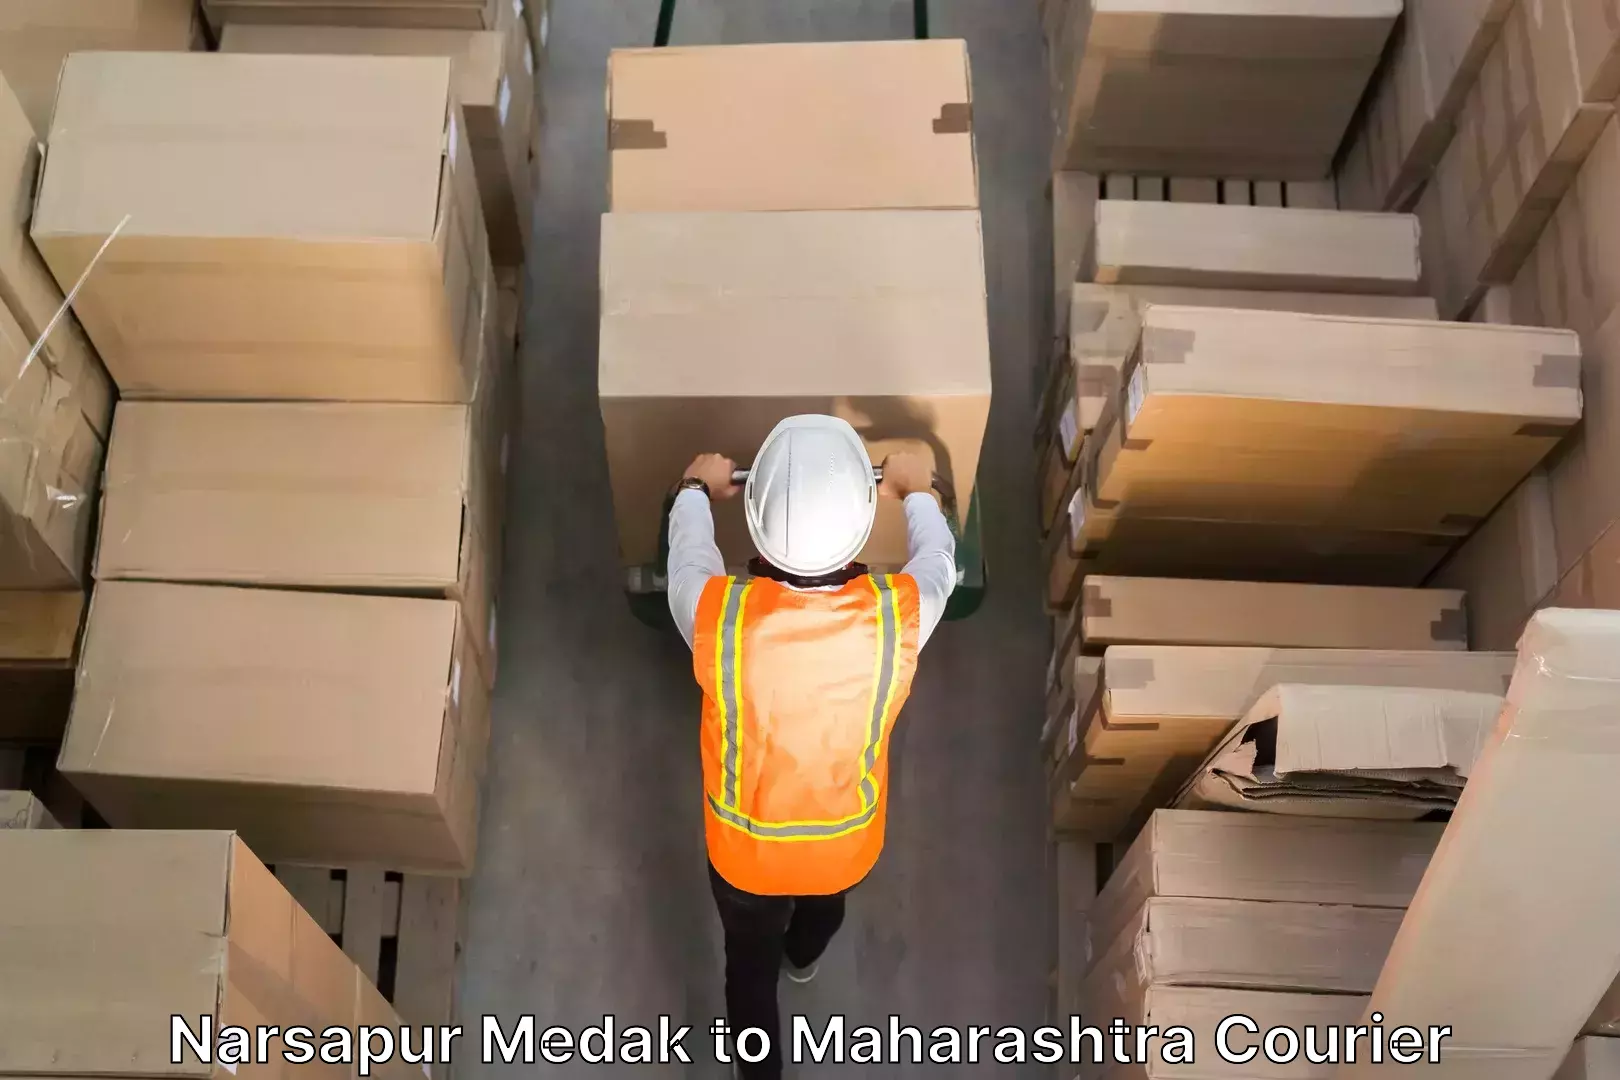 Door-to-door relocation services Narsapur Medak to Maharashtra